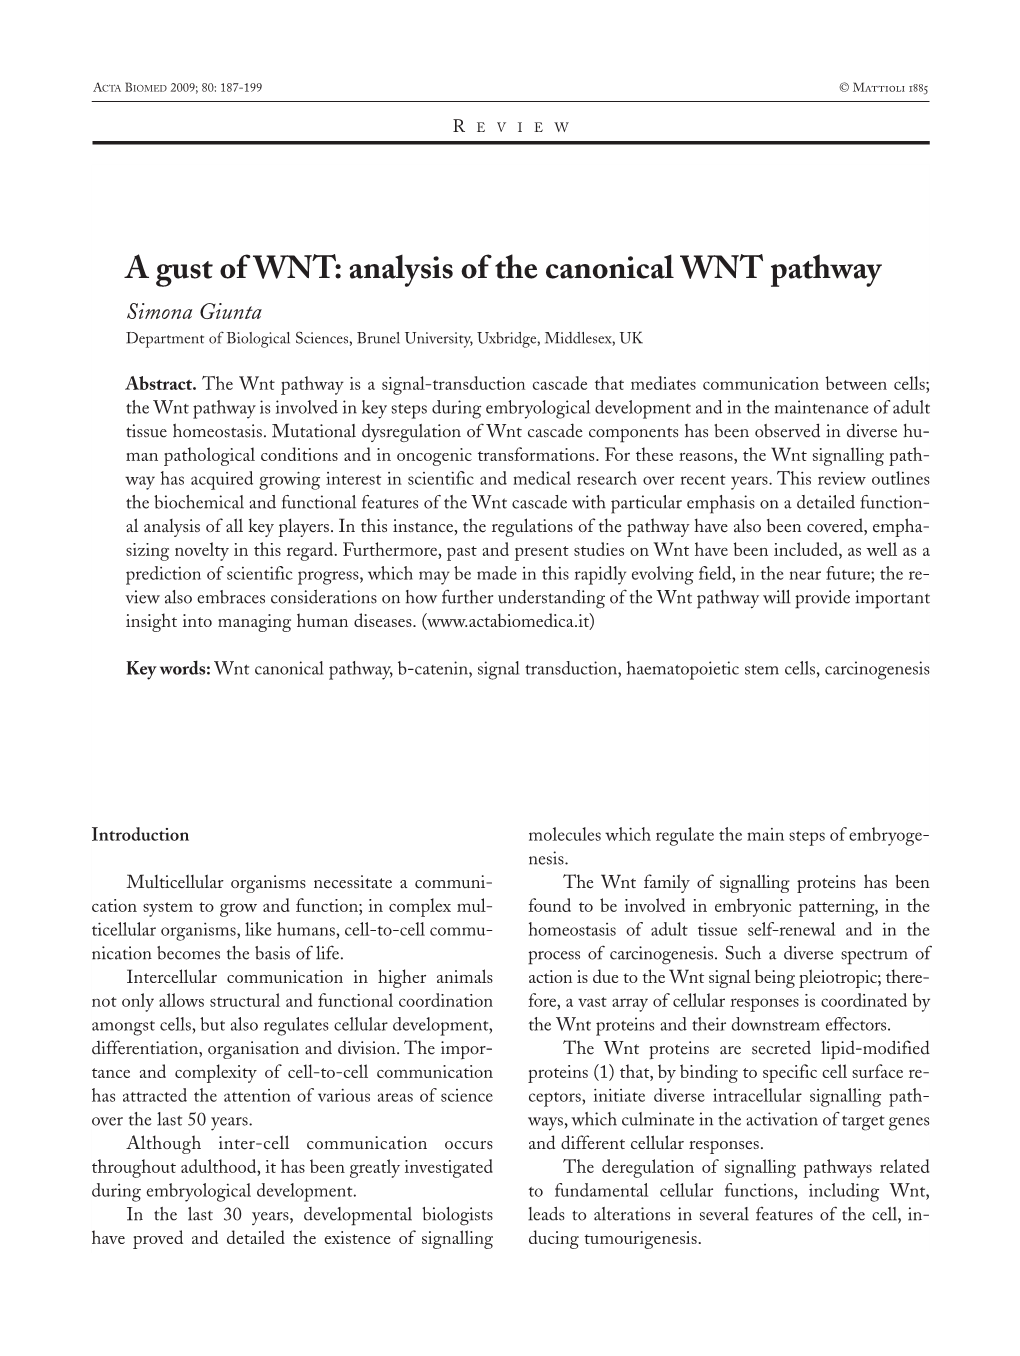 Analysis of the Canonical WNT Pathway Simona Giunta Department of Biological Sciences, Brunel University, Uxbridge, Middlesex, UK